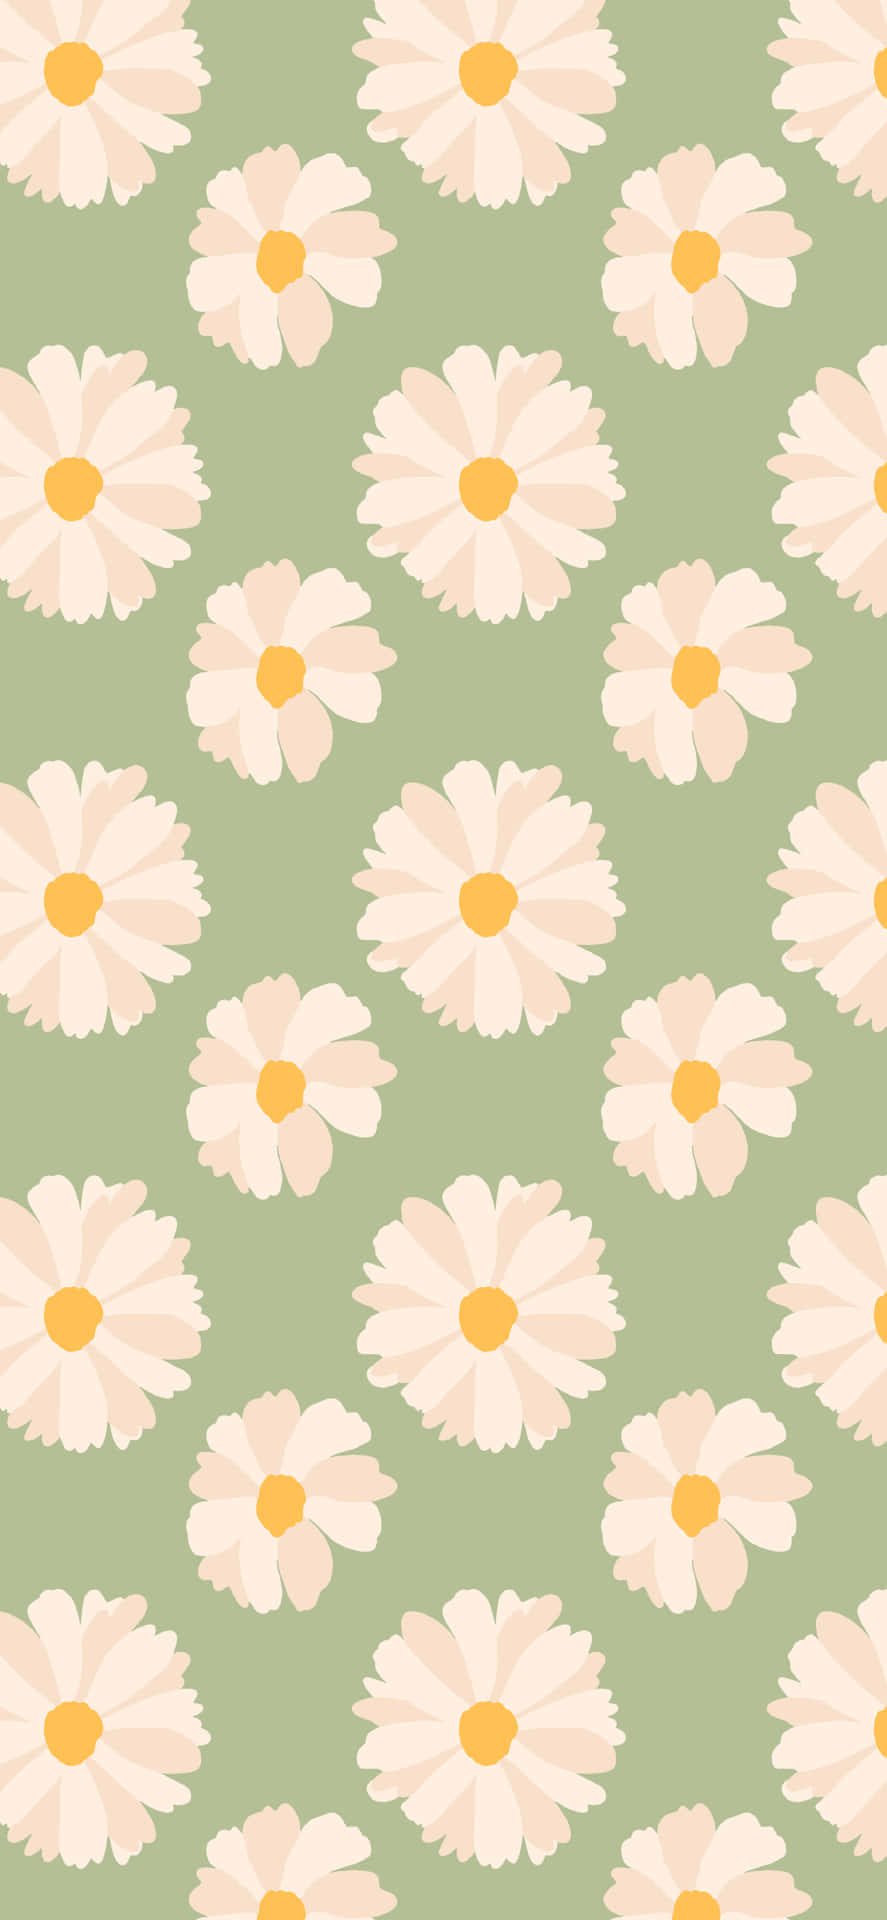 Download Cute Spring Daisies Iphone Wallpaper | Wallpapers.com